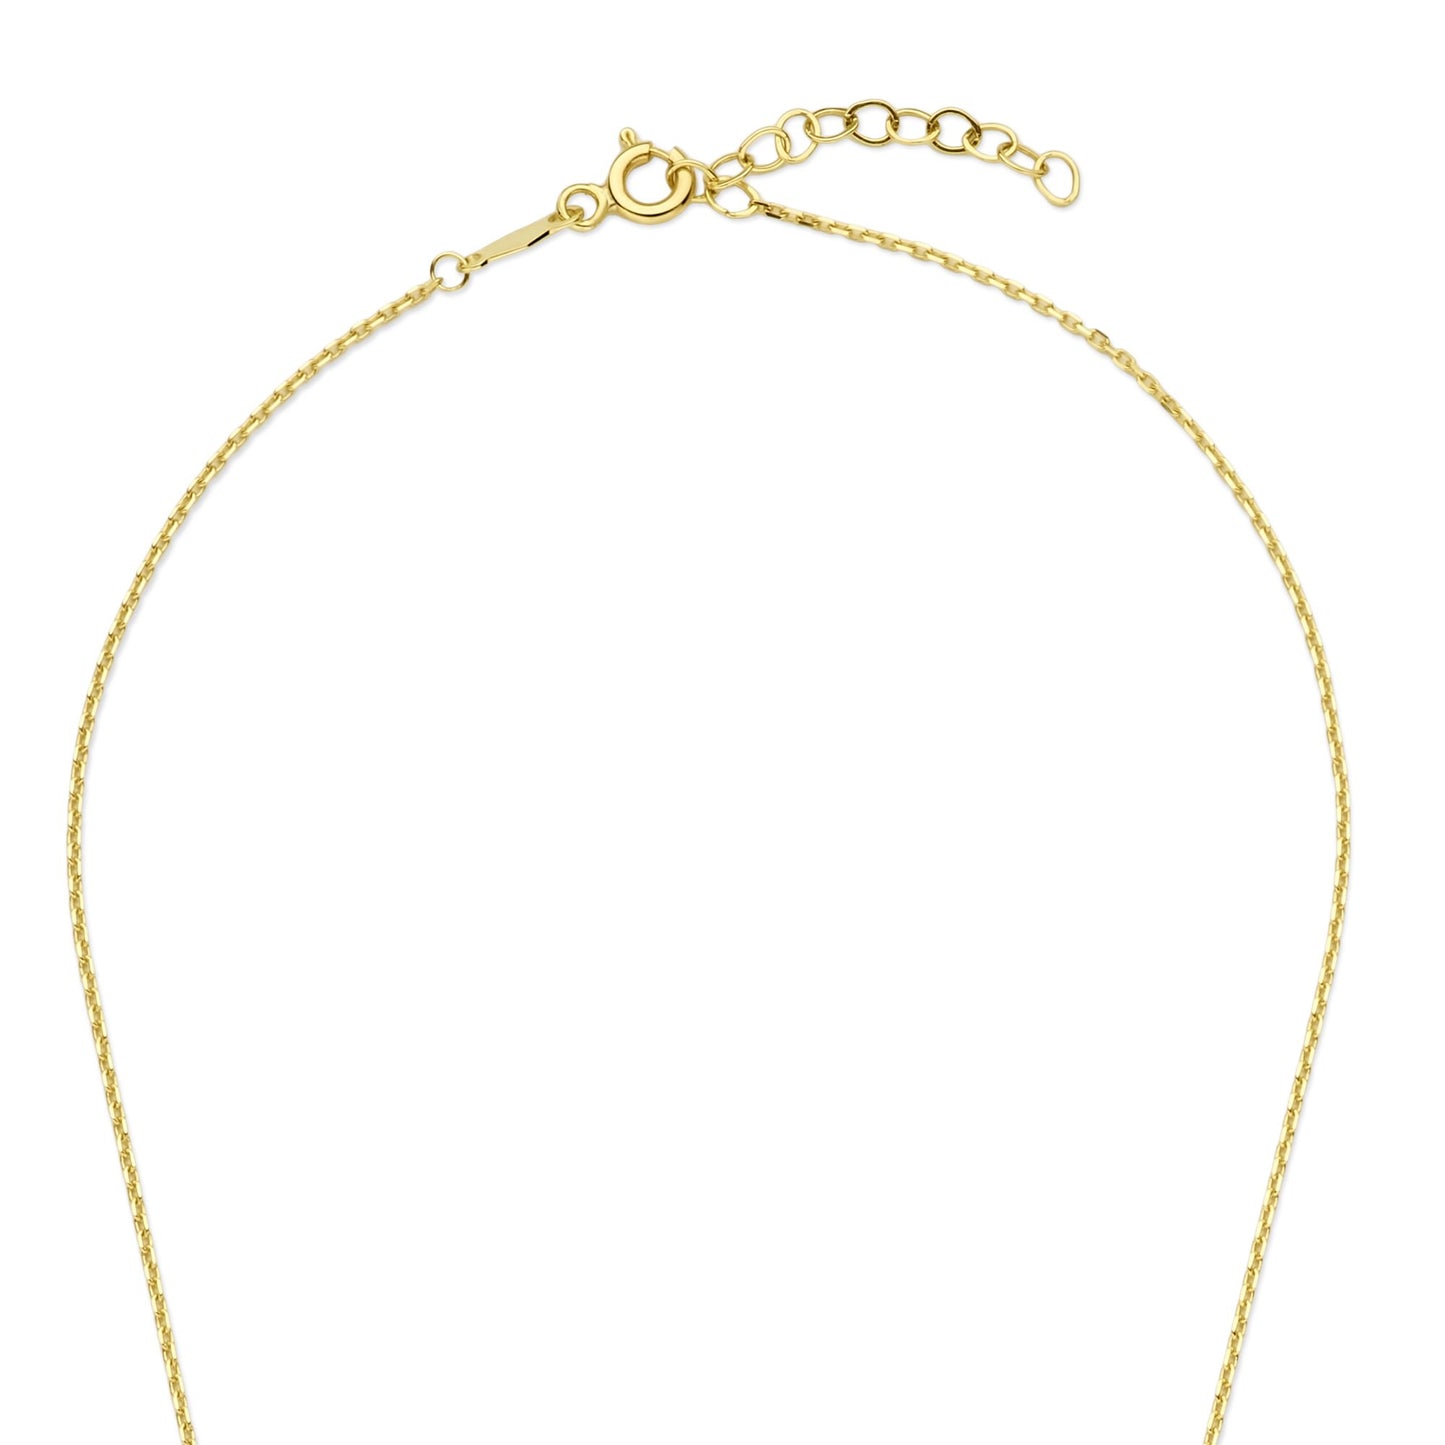 Monte Napoleone Perla collier en or 9 carats avec perle